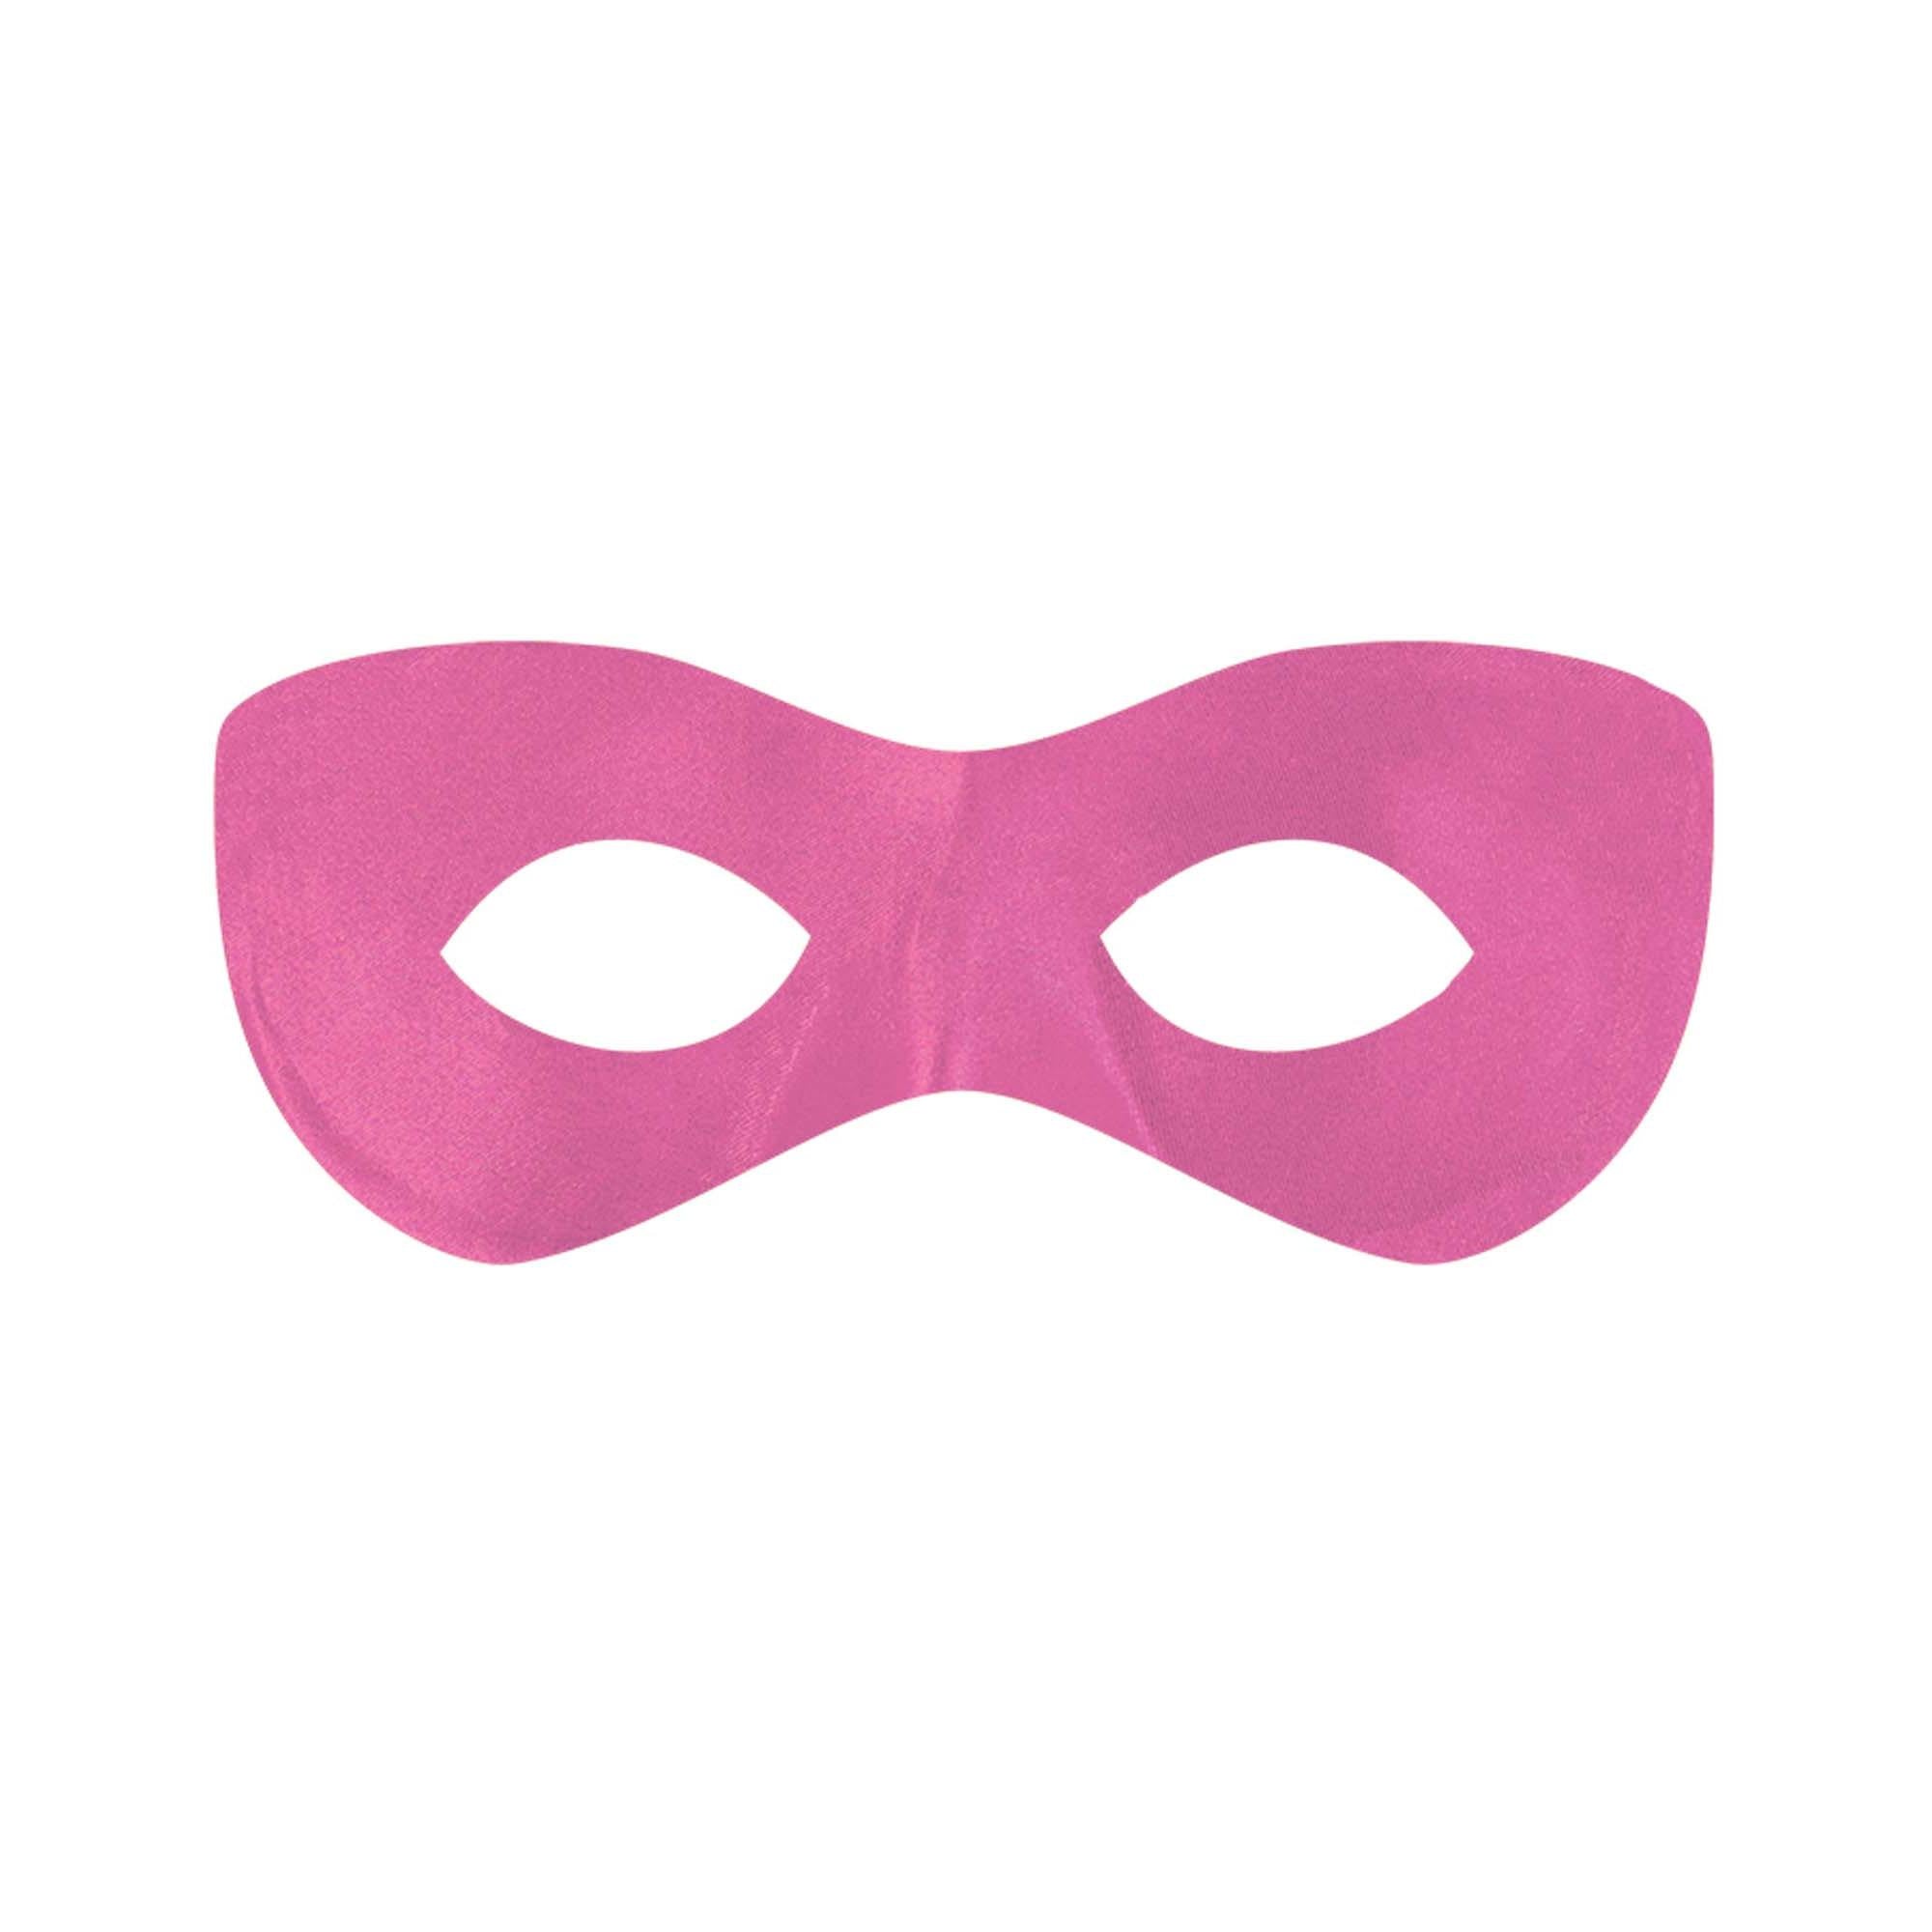 Adult Pink Superhero Mask